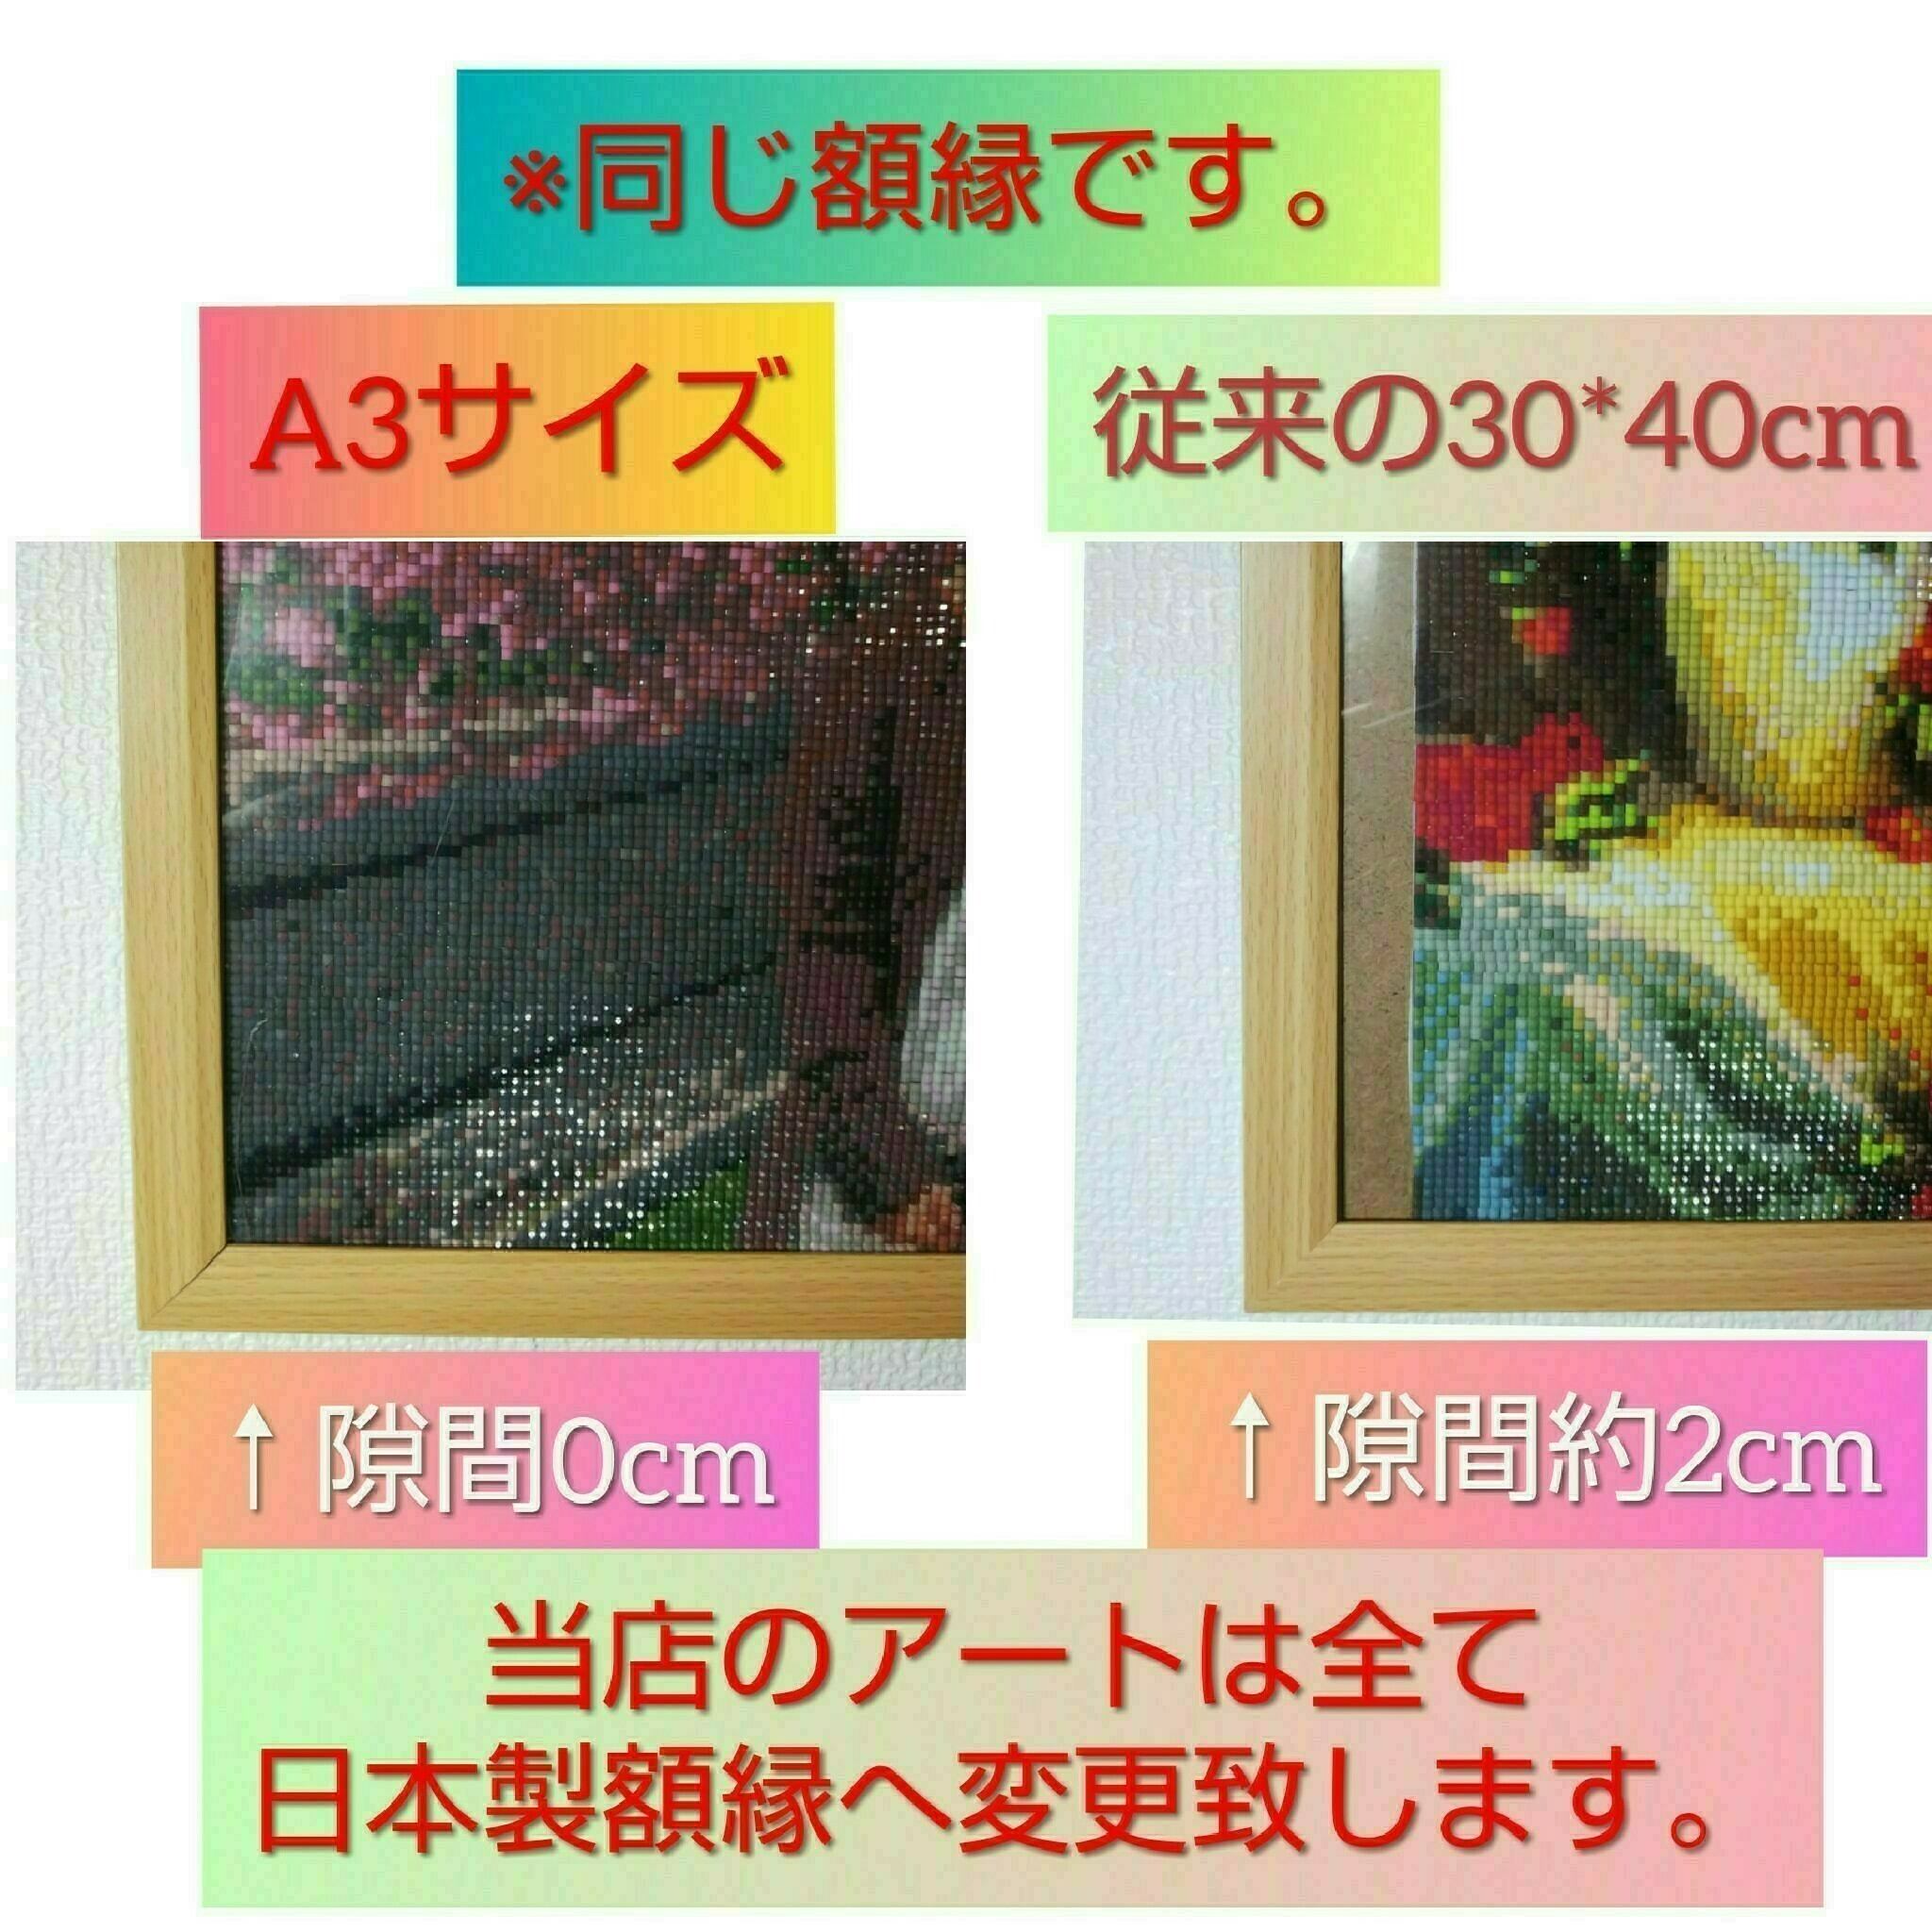 A4額付き square【Ft-020】ダイヤモンドアート